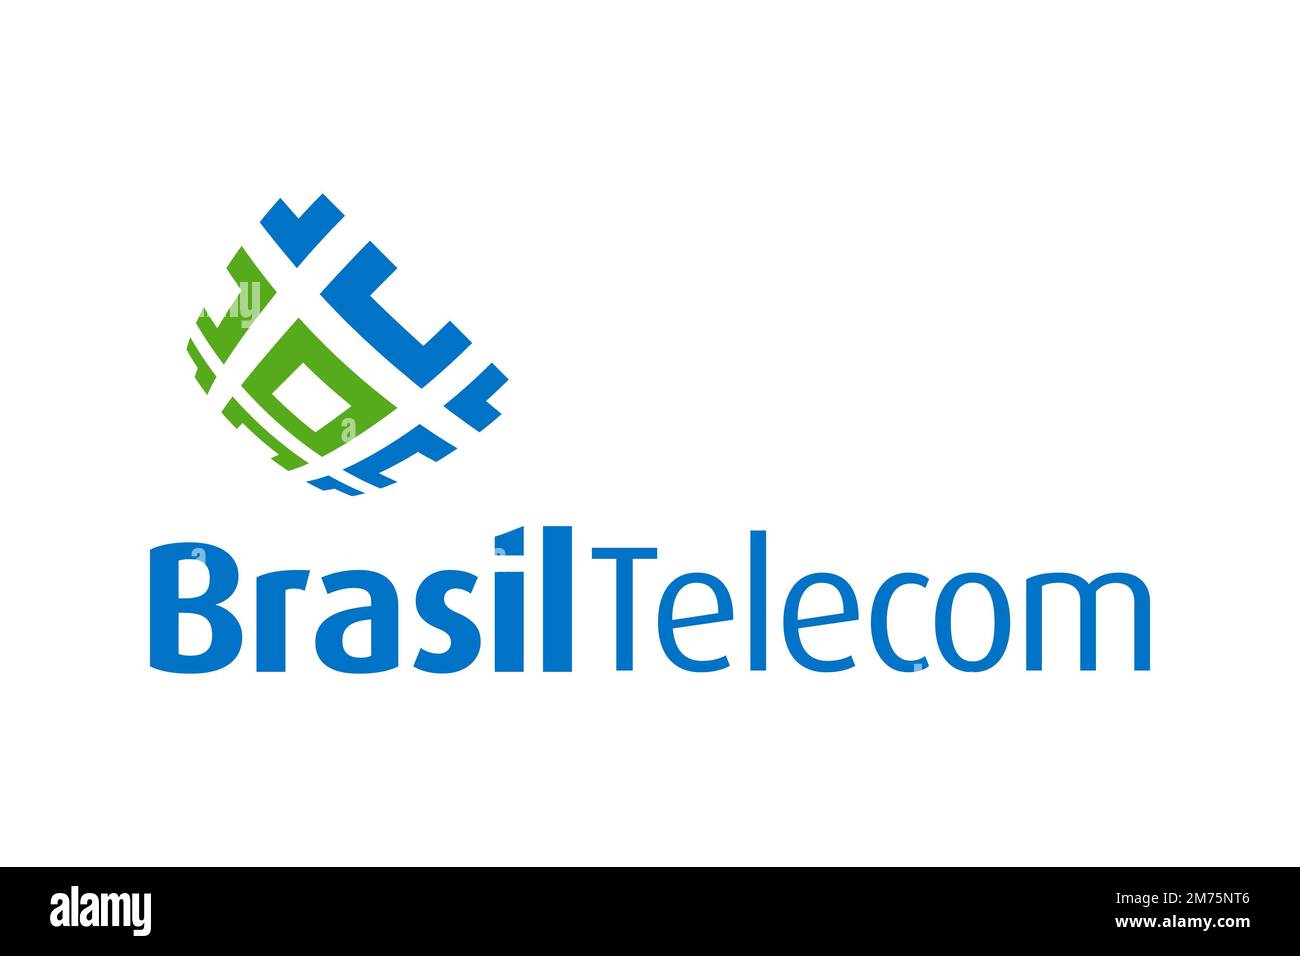 Brasil Telecom, Logo, White background Stock Photo - Alamy